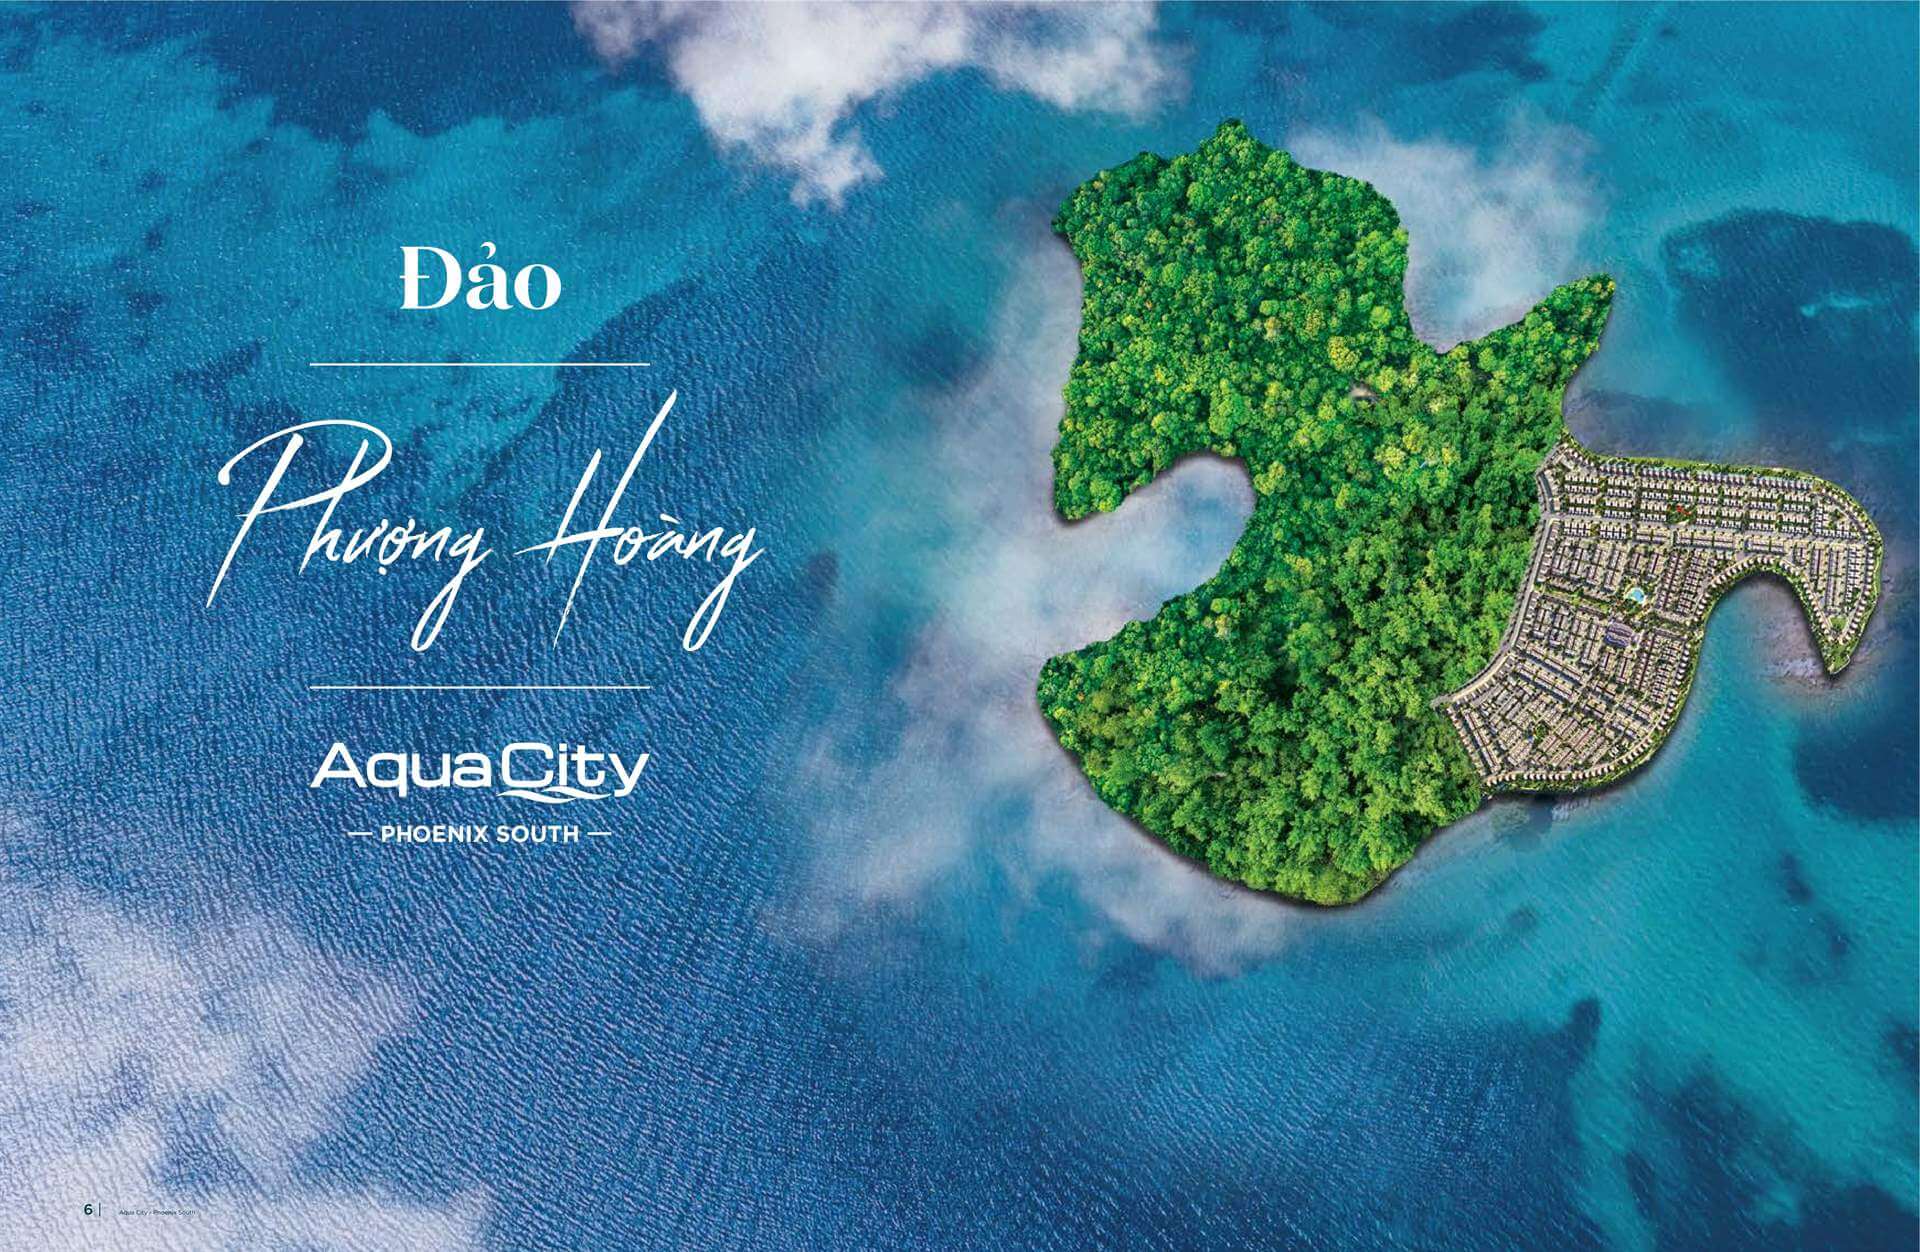 phoenixsouth Aqua City Dao Phuong Hoang